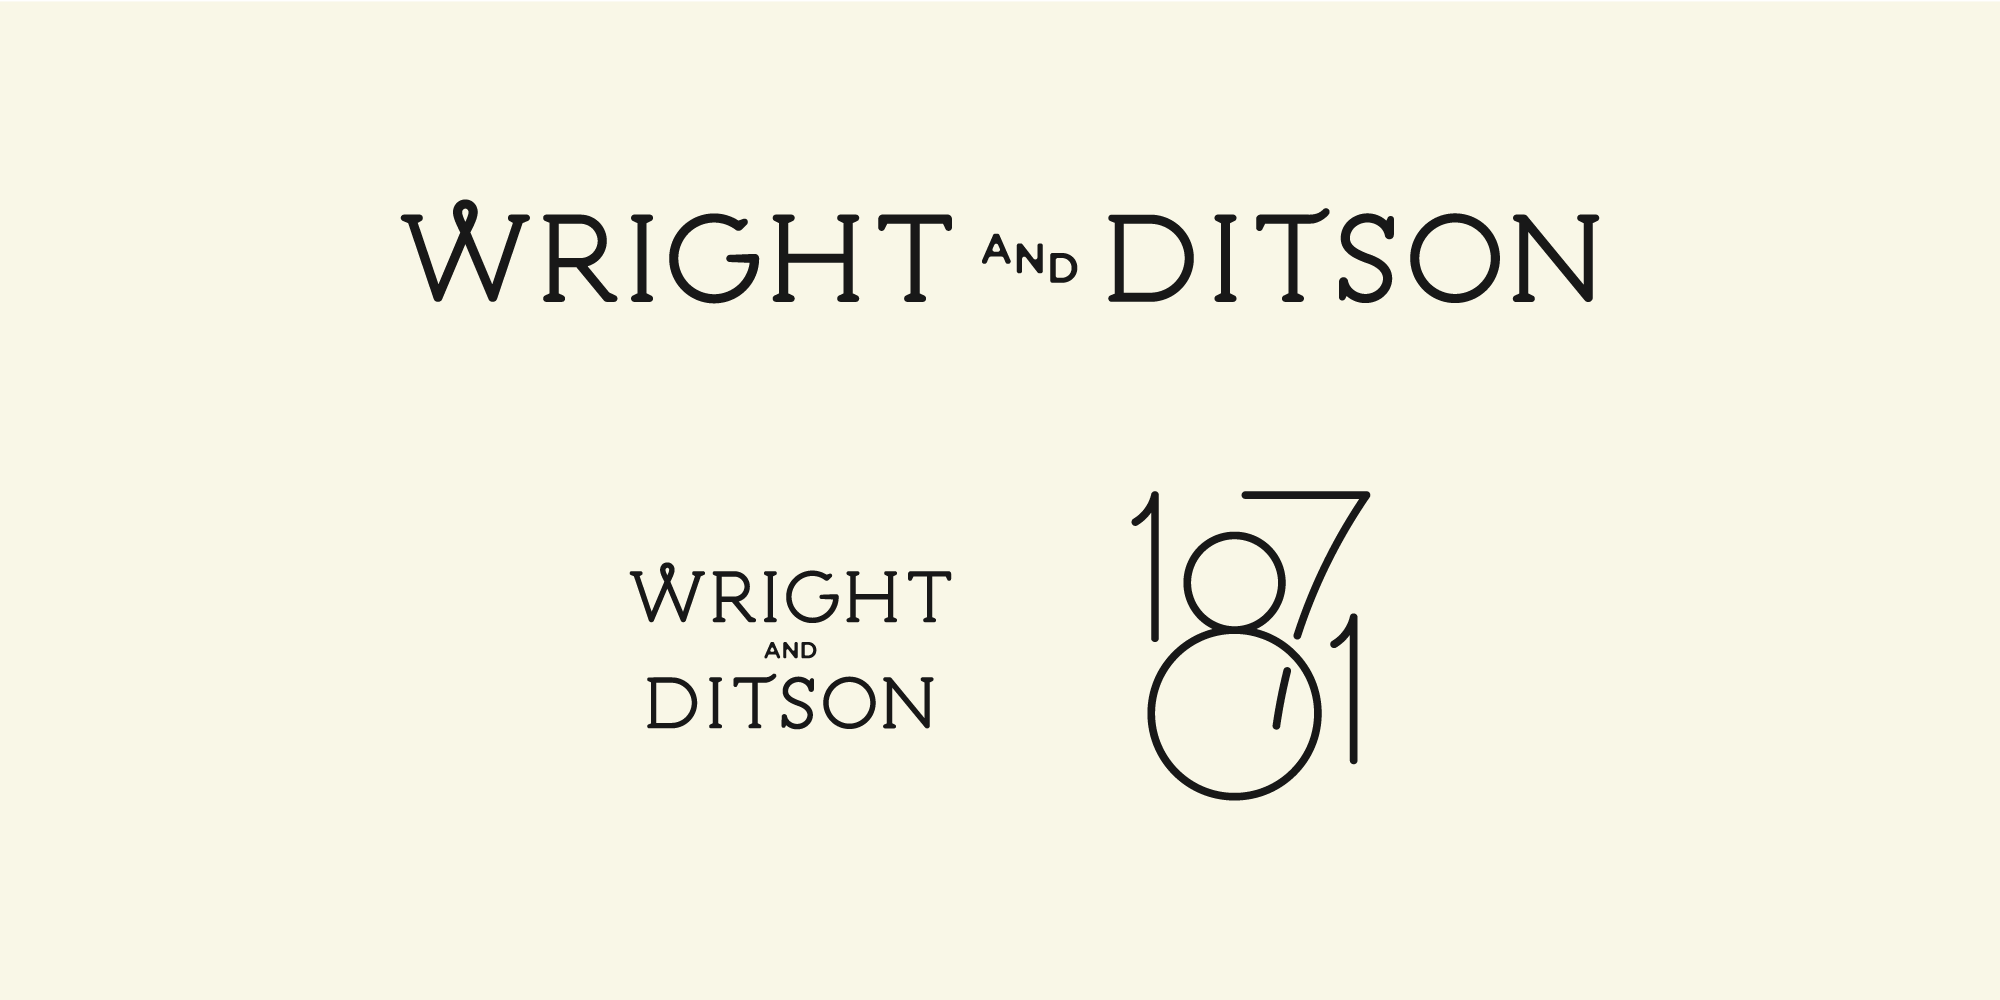 Wright Ditson Brand Identity BBG